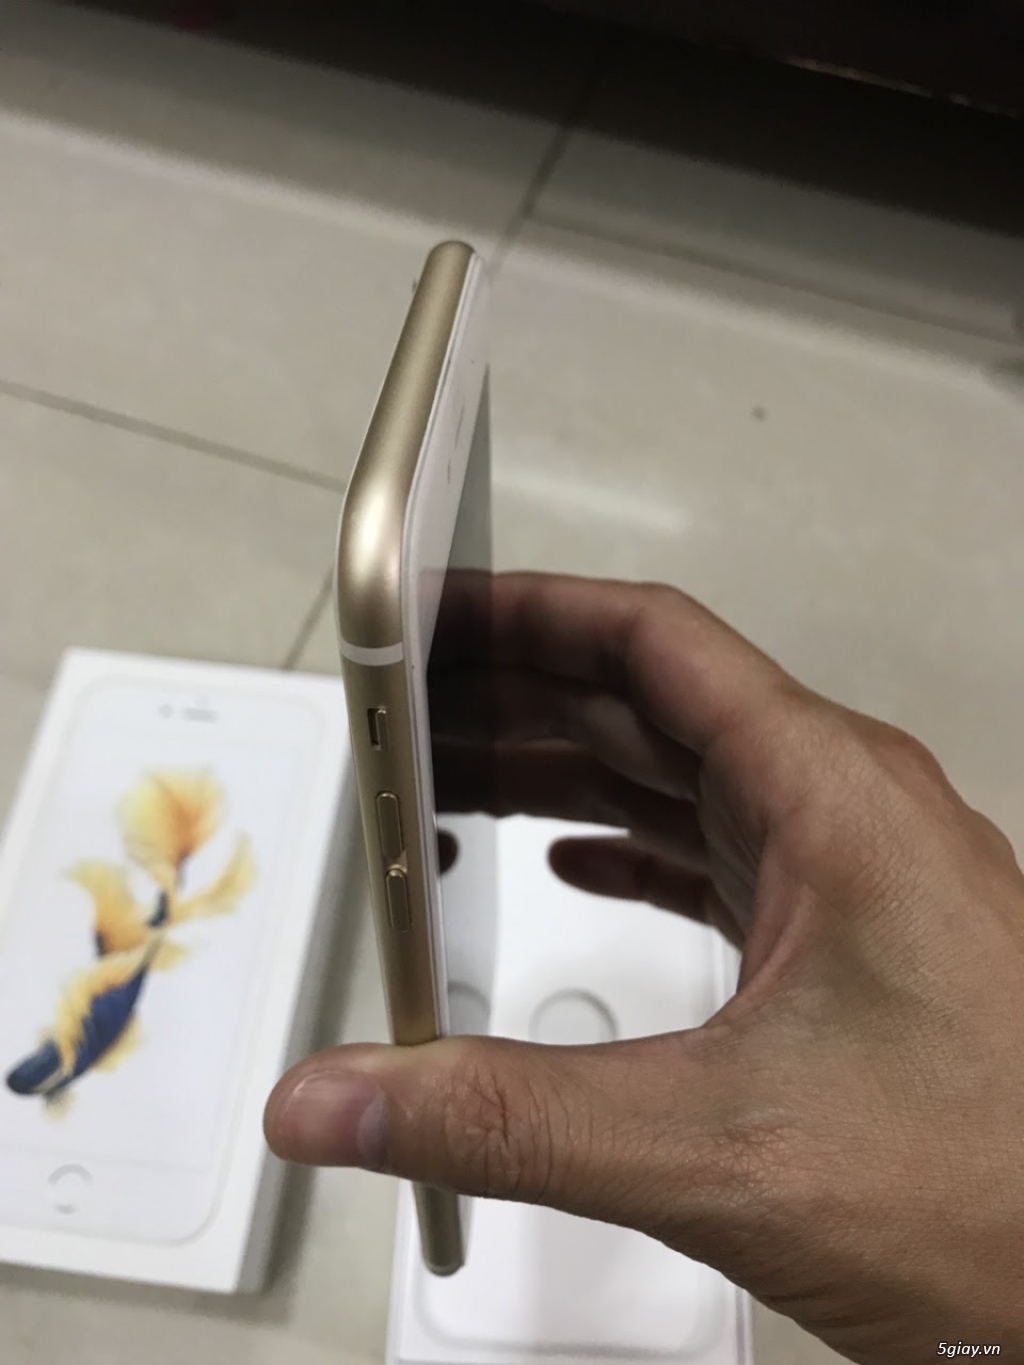 Iphone 6s plus 16G gold - Quốc tế - 3